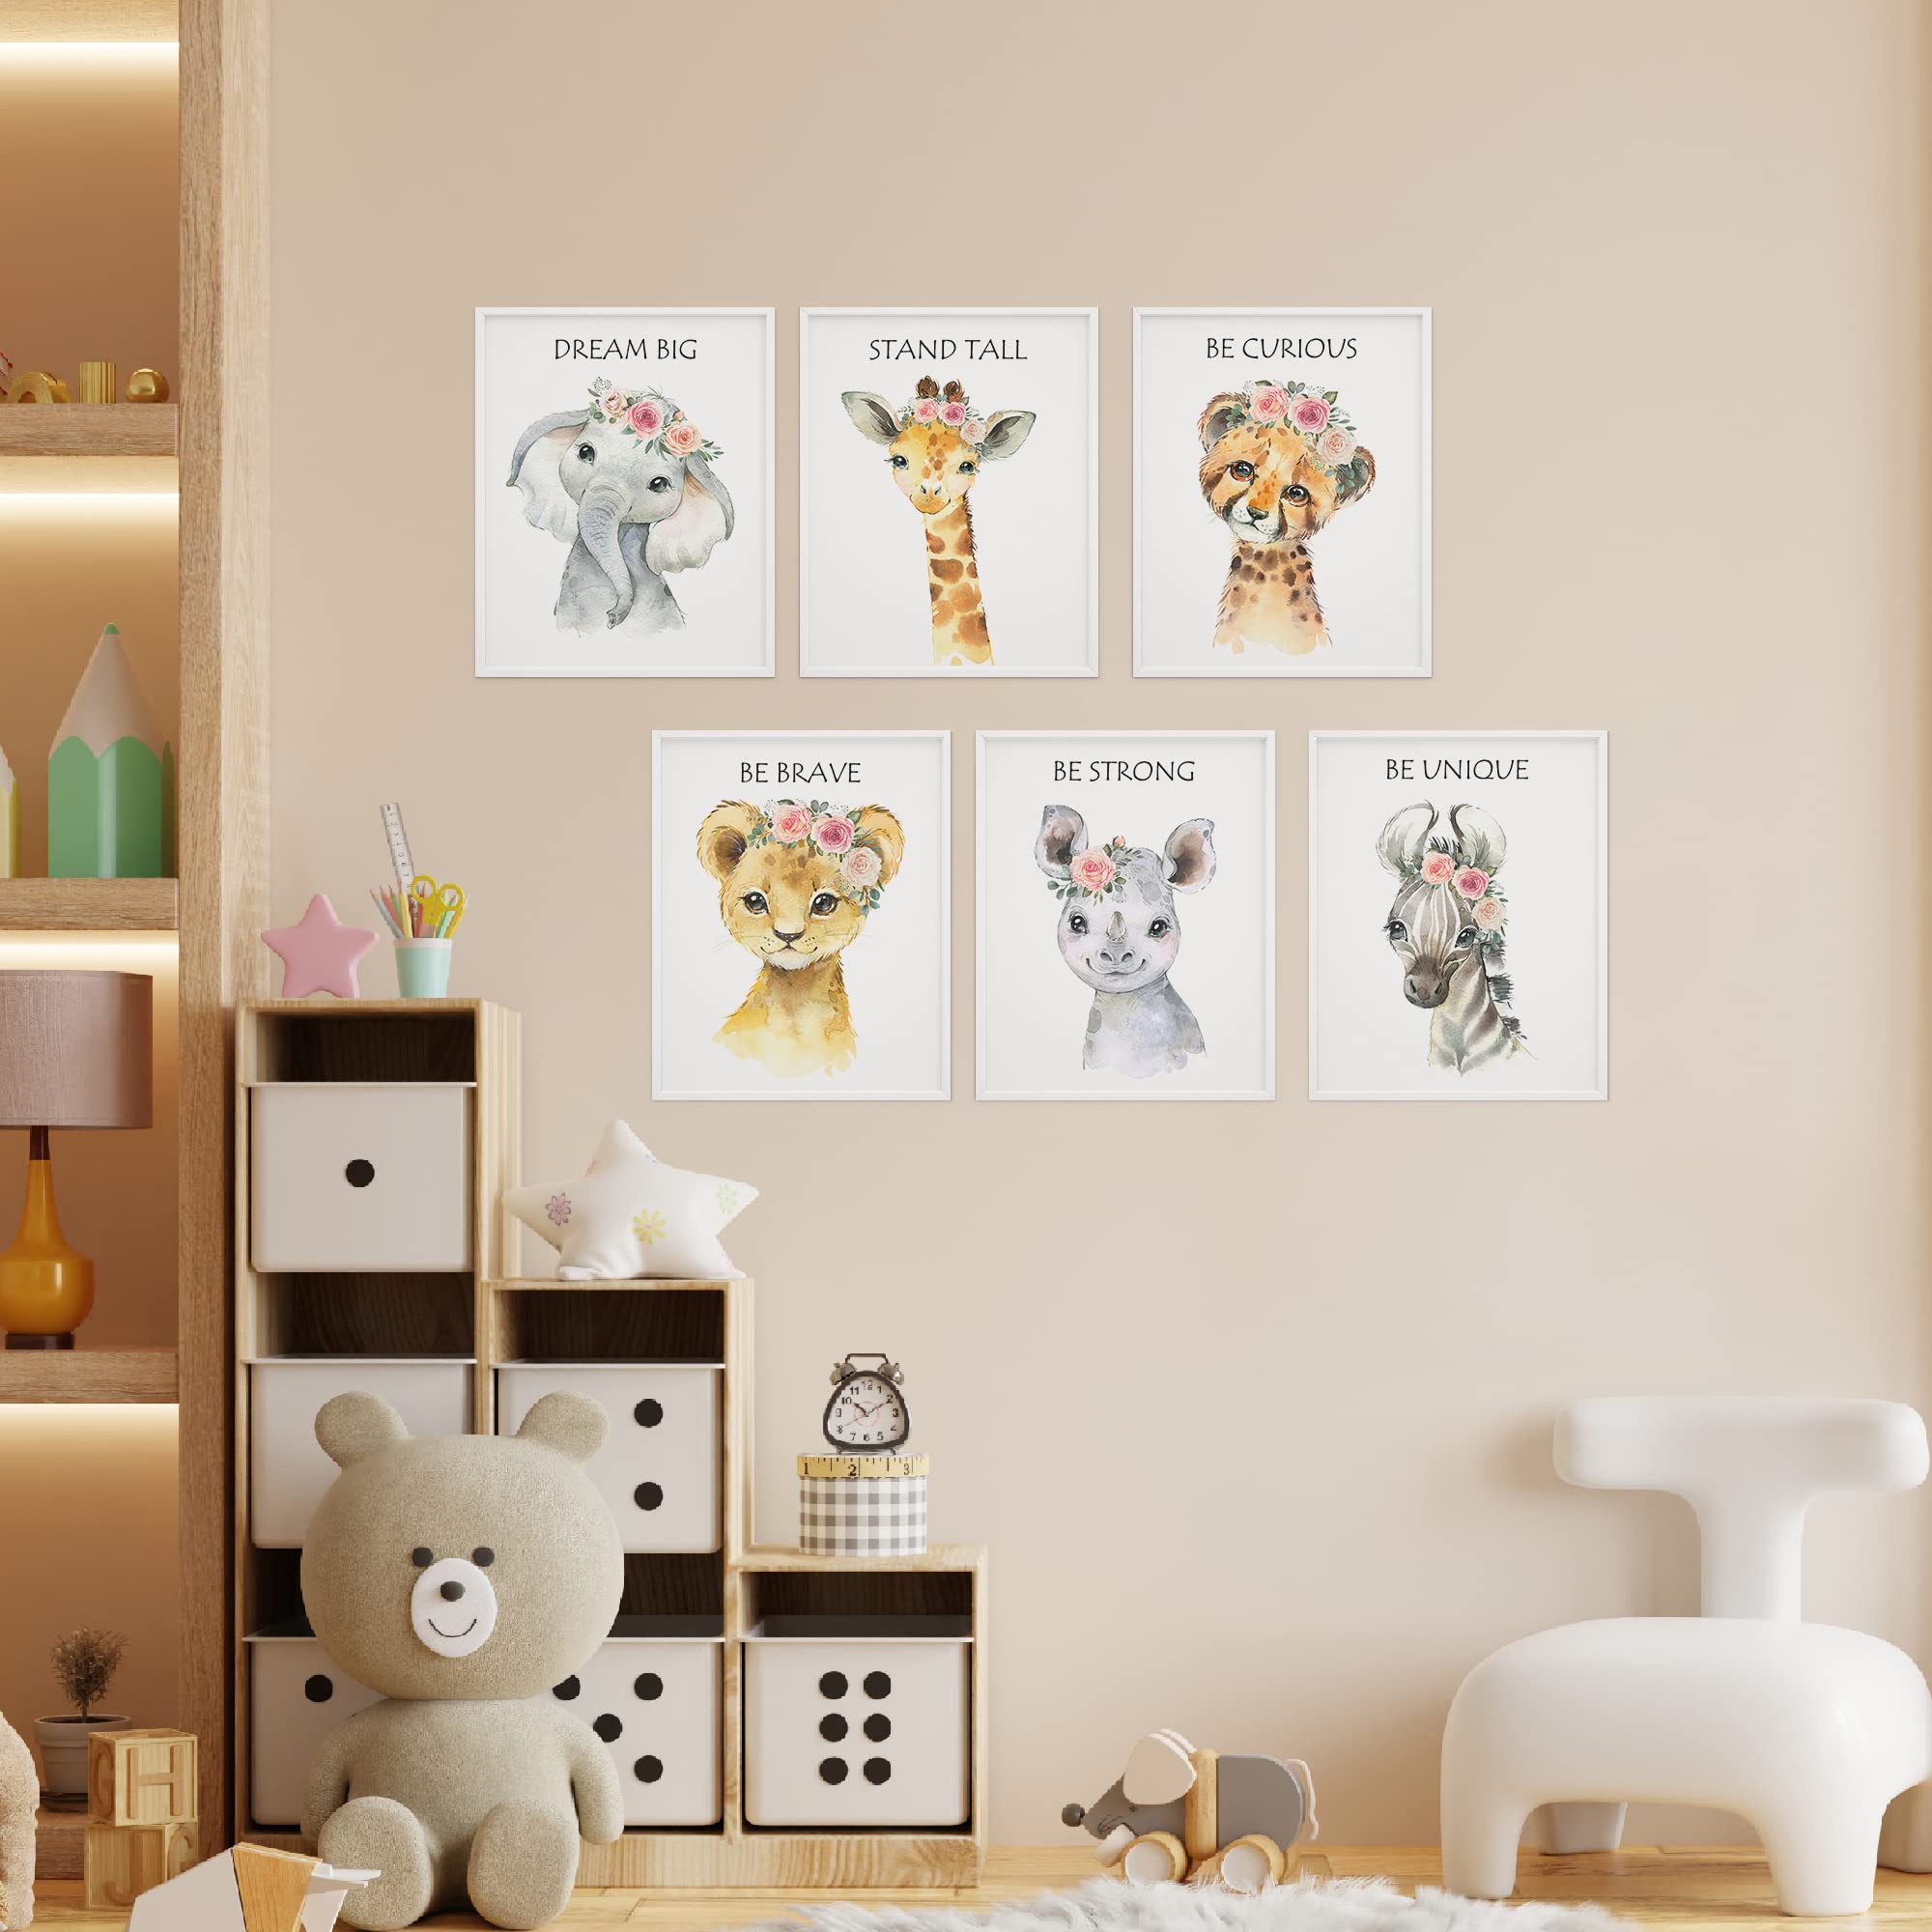 LOVEDMORE Baby Safari Nursery Wall Decor | Animal Wall Art Prints Set of 6 Posters | Jungle Nursery Room Decor for Baby Kids (UNFRAMED 8x10 Inch)